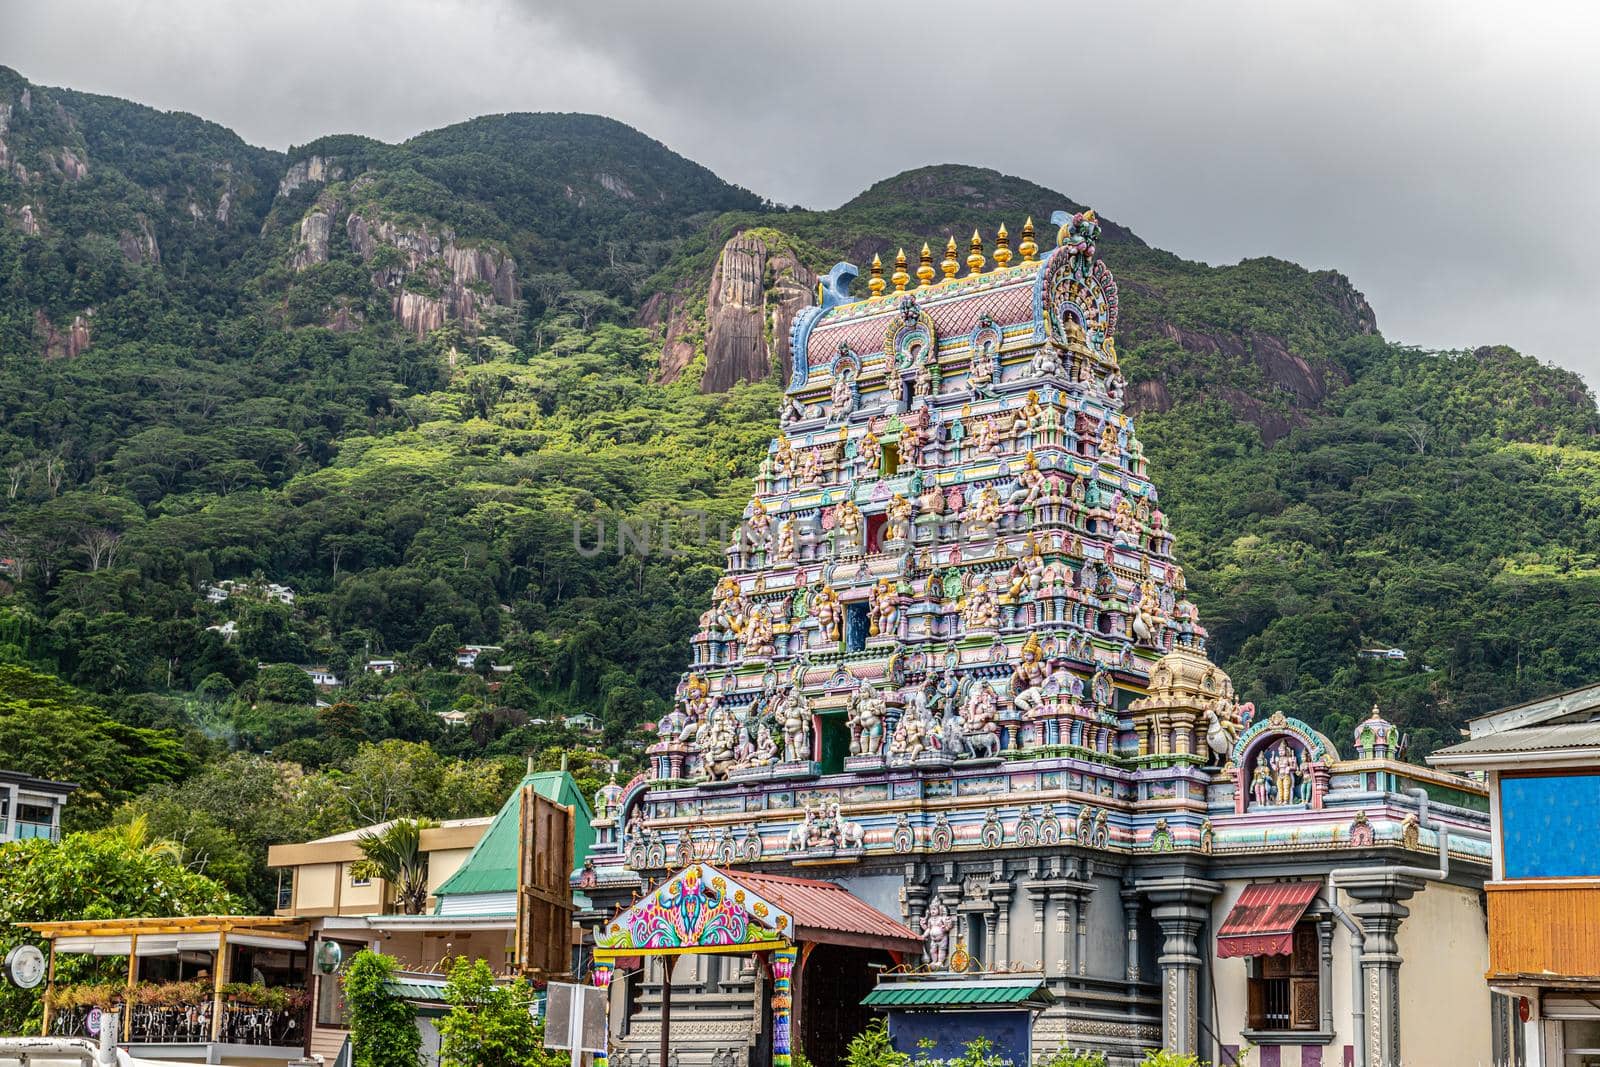 Hindu temple in Victoria, Seychelles by reinerc